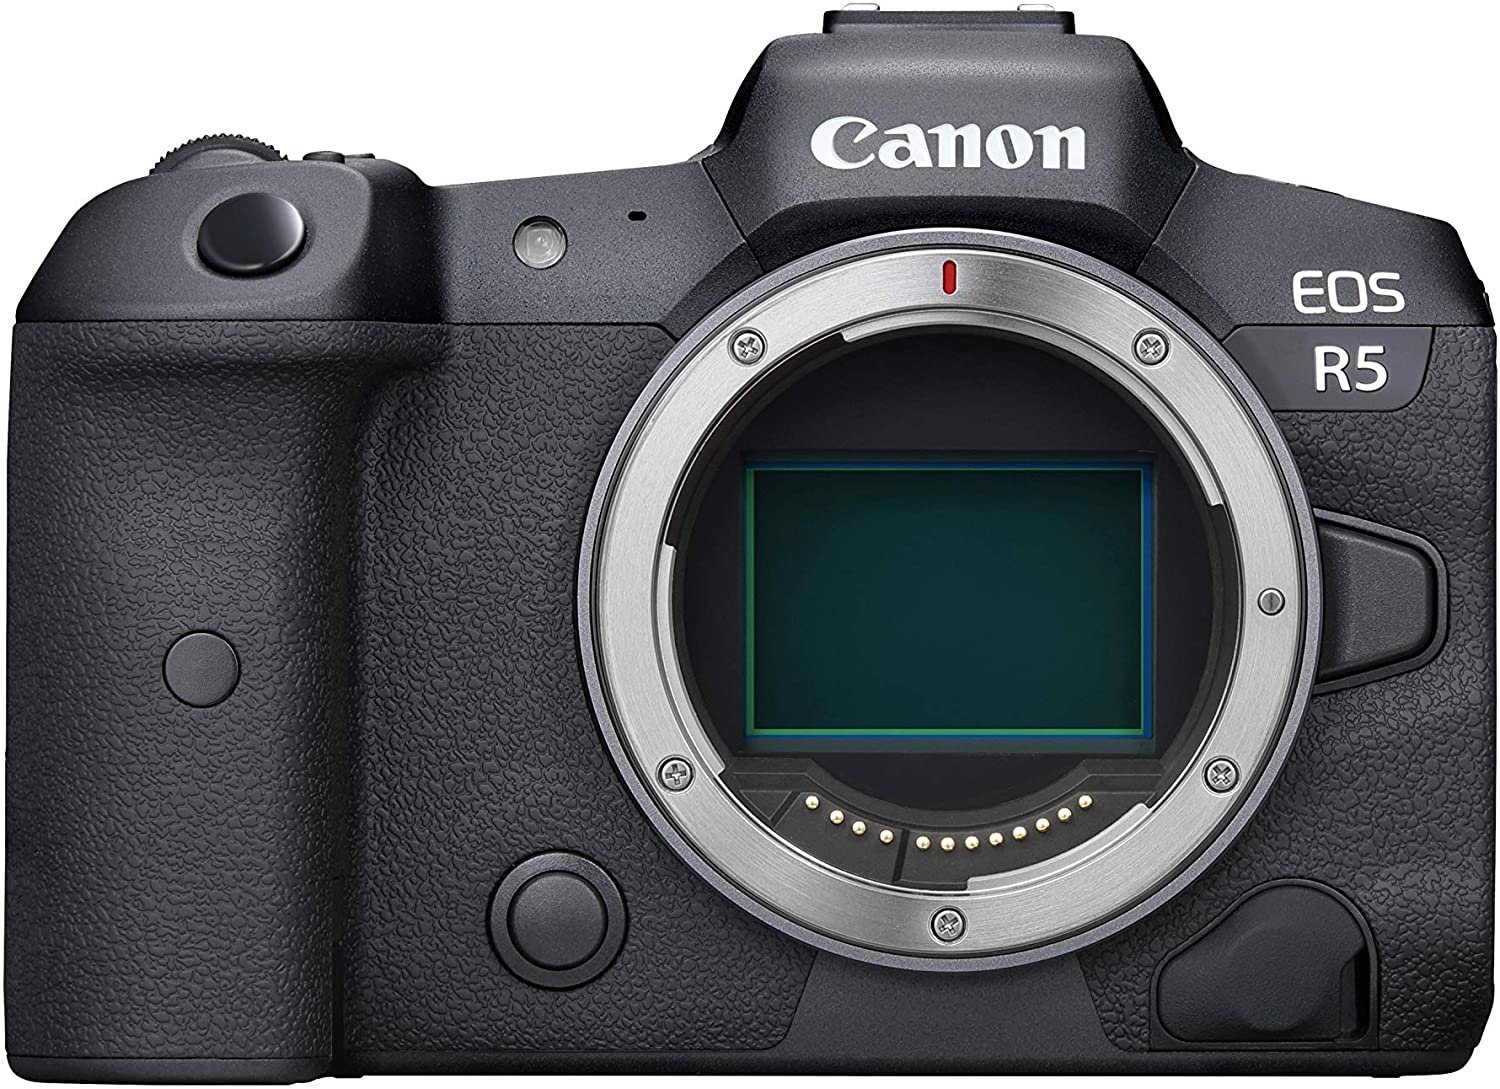 Picture of a Canon EOS R5 camera